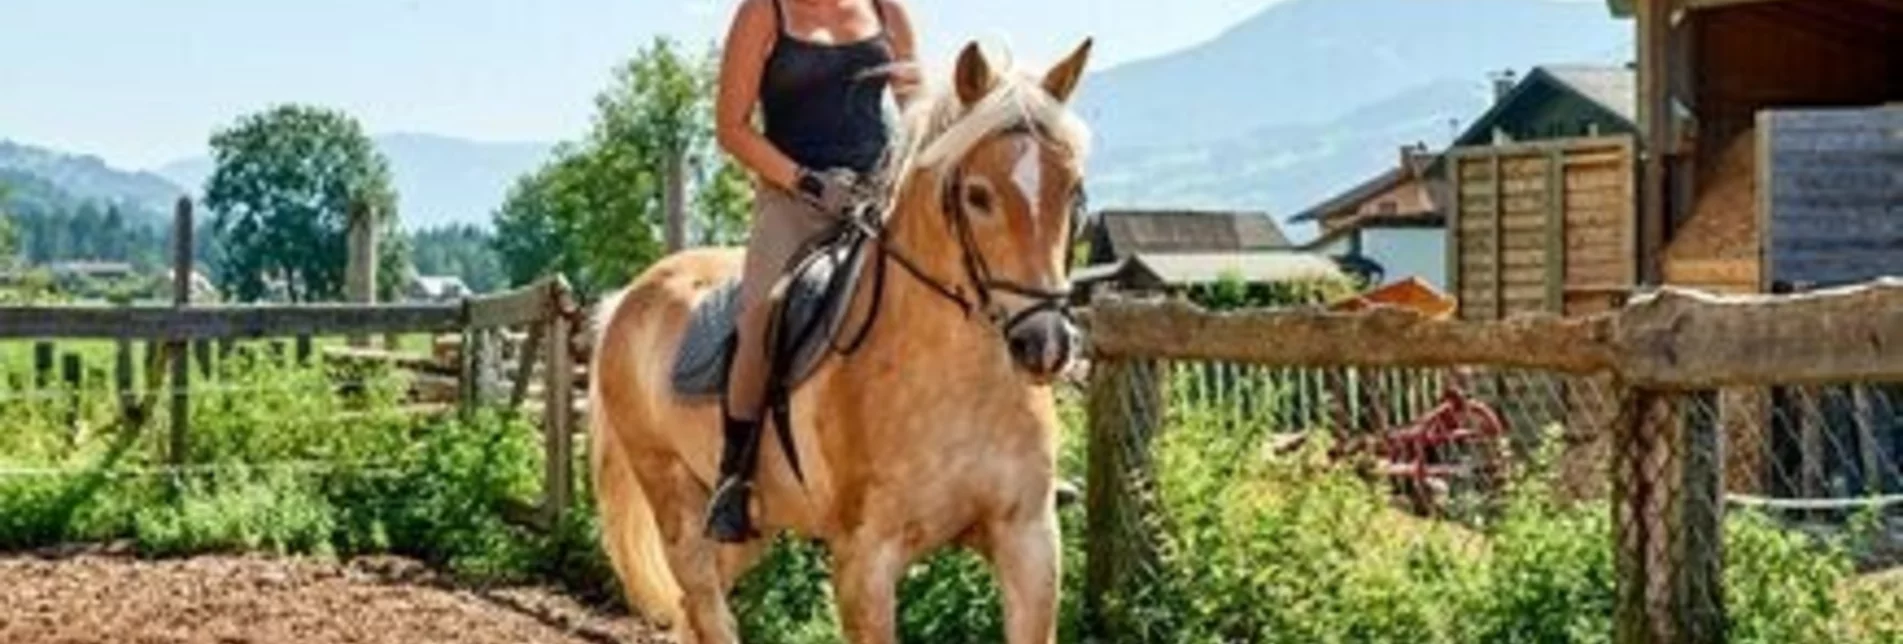 Horse Riding Horseback riding at Abenteuerhof Schiefer - Touren-Impression #1